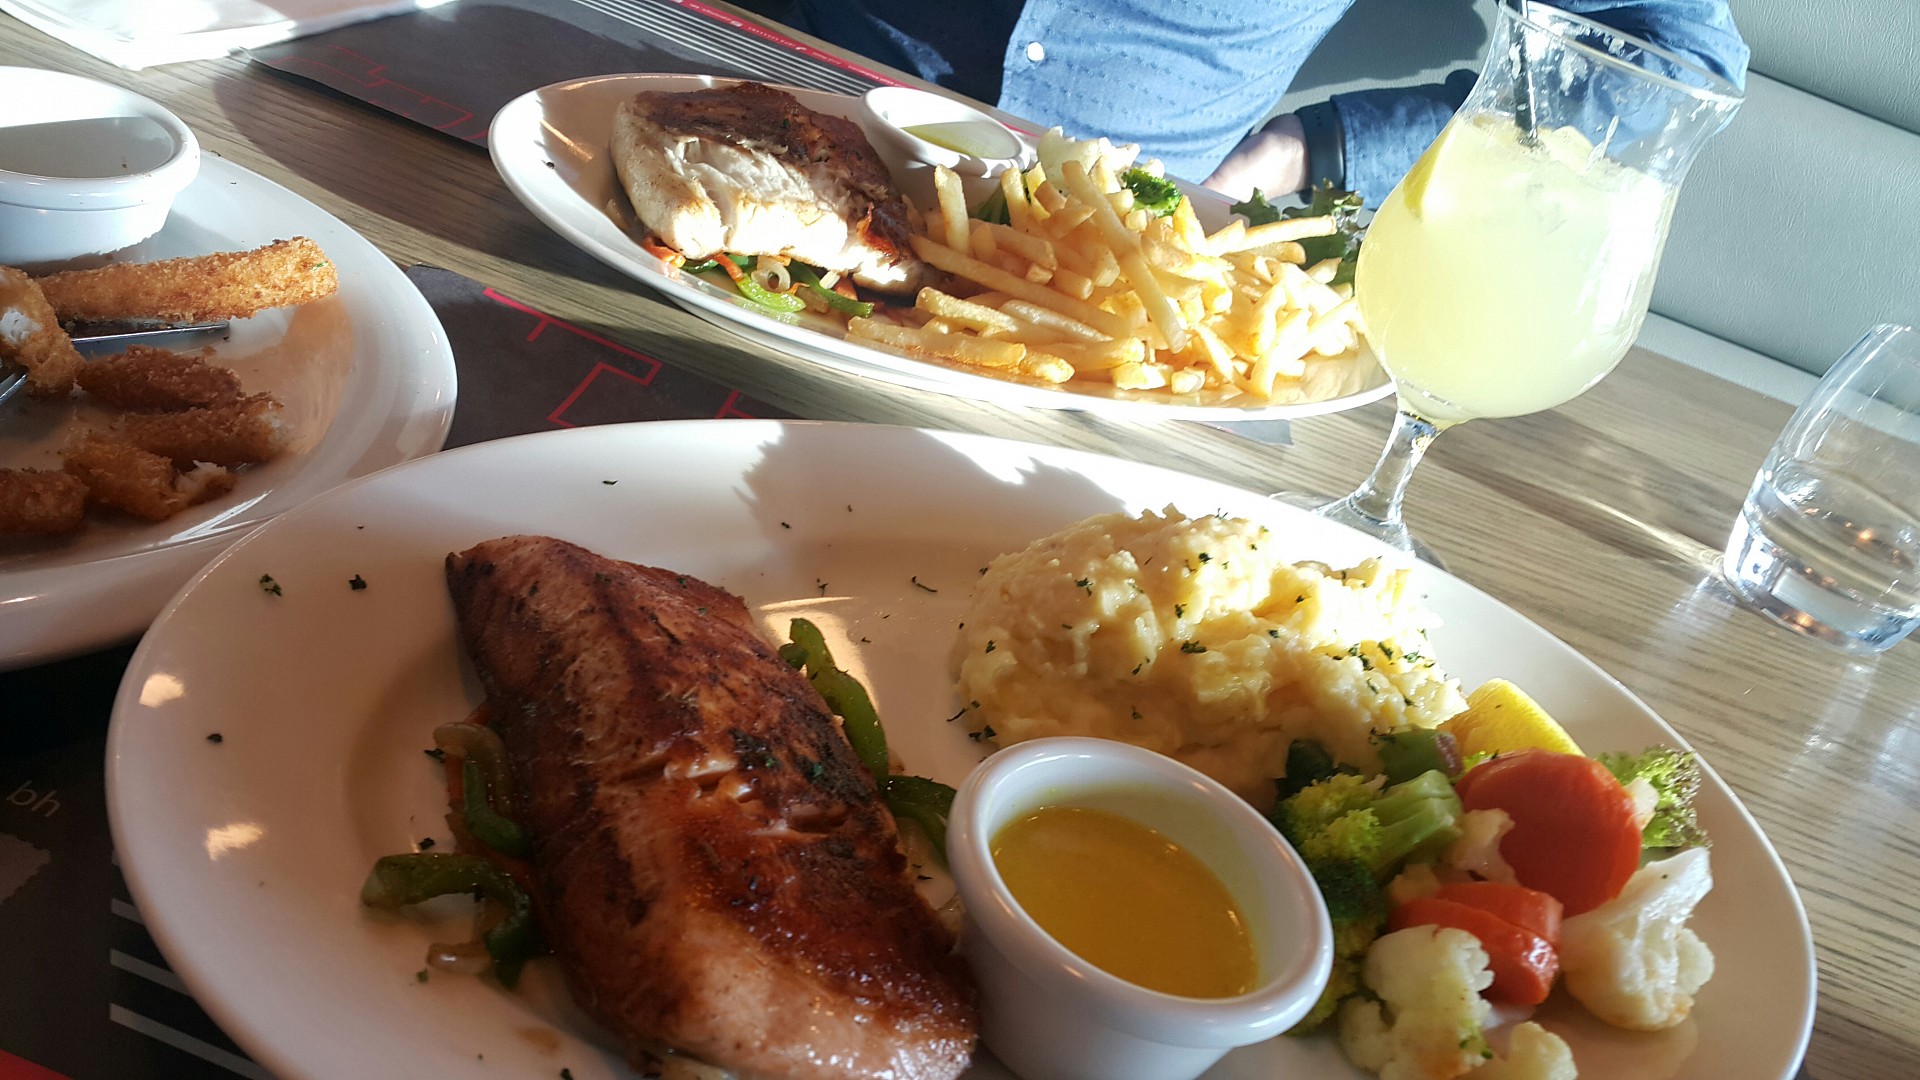 Salmon 😋 always my fav seafood dish 👌👌 @ جيميز كيلر براونز - البحرين